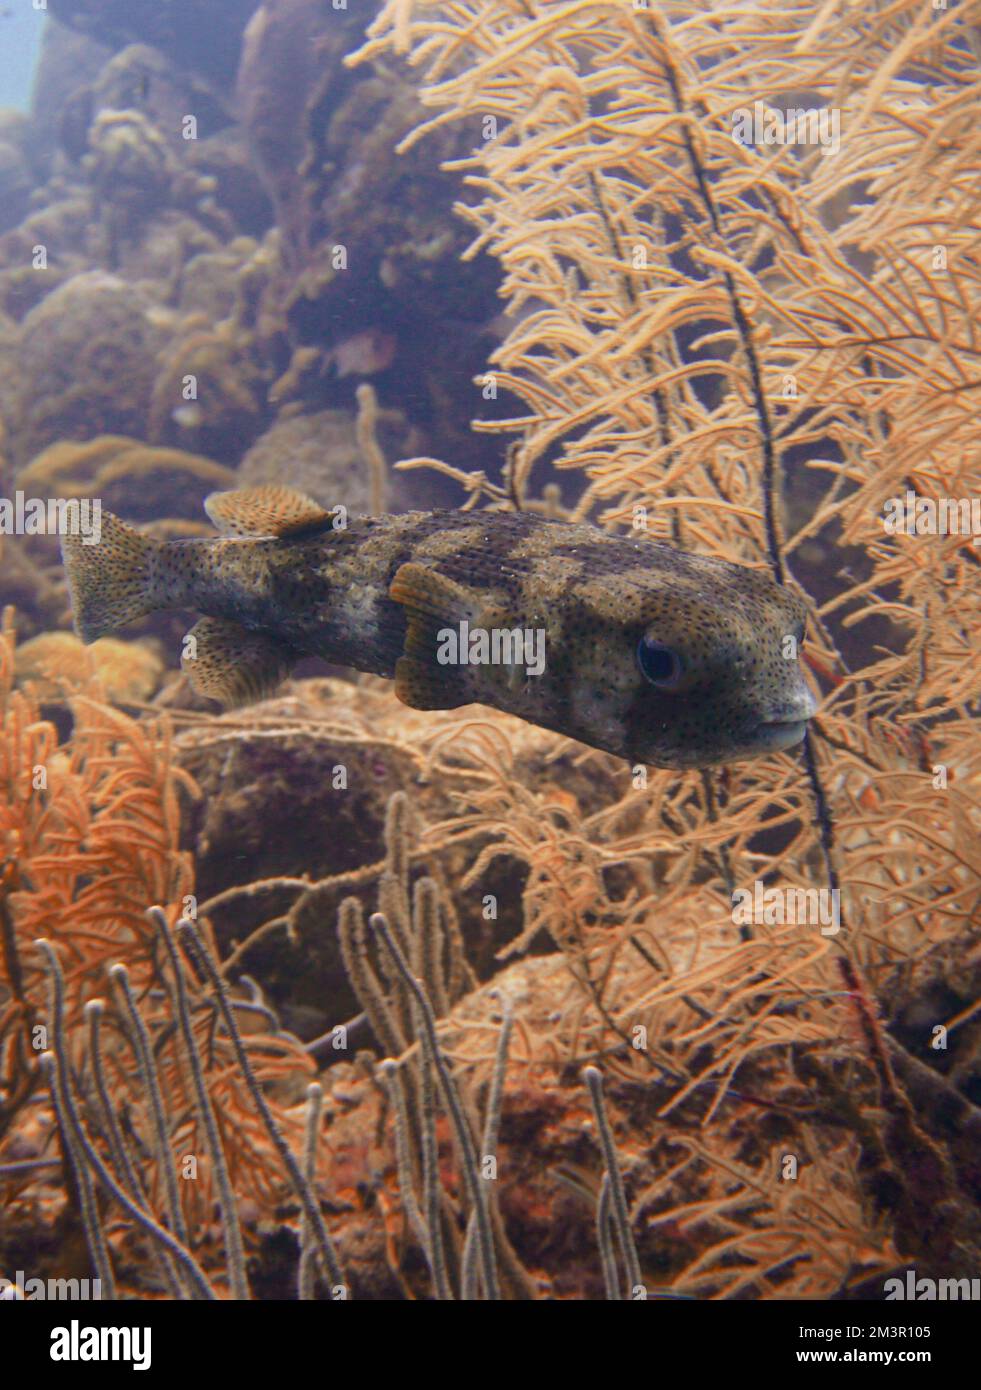 Porcupine fish, pufferfish with military camo pattern Fugu In The Caribbean Sea. Curacao, Aruba, Bonaire, Animal, Scuba Diving, Ocean, Underwater Stock Photo